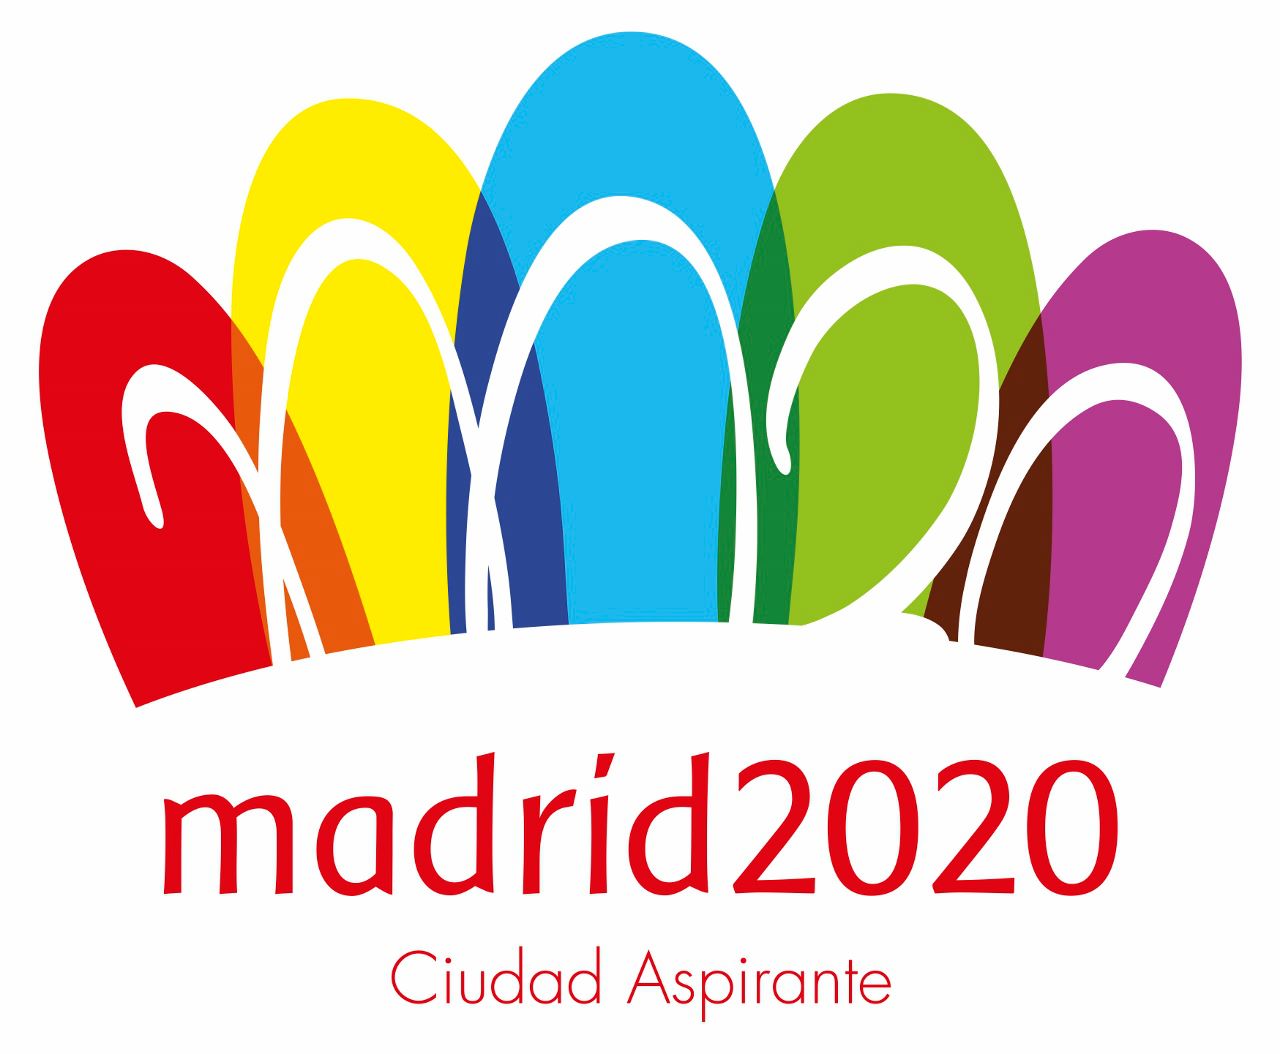 Madrid-2020-Ciudad-Aspirante-logo.jpg